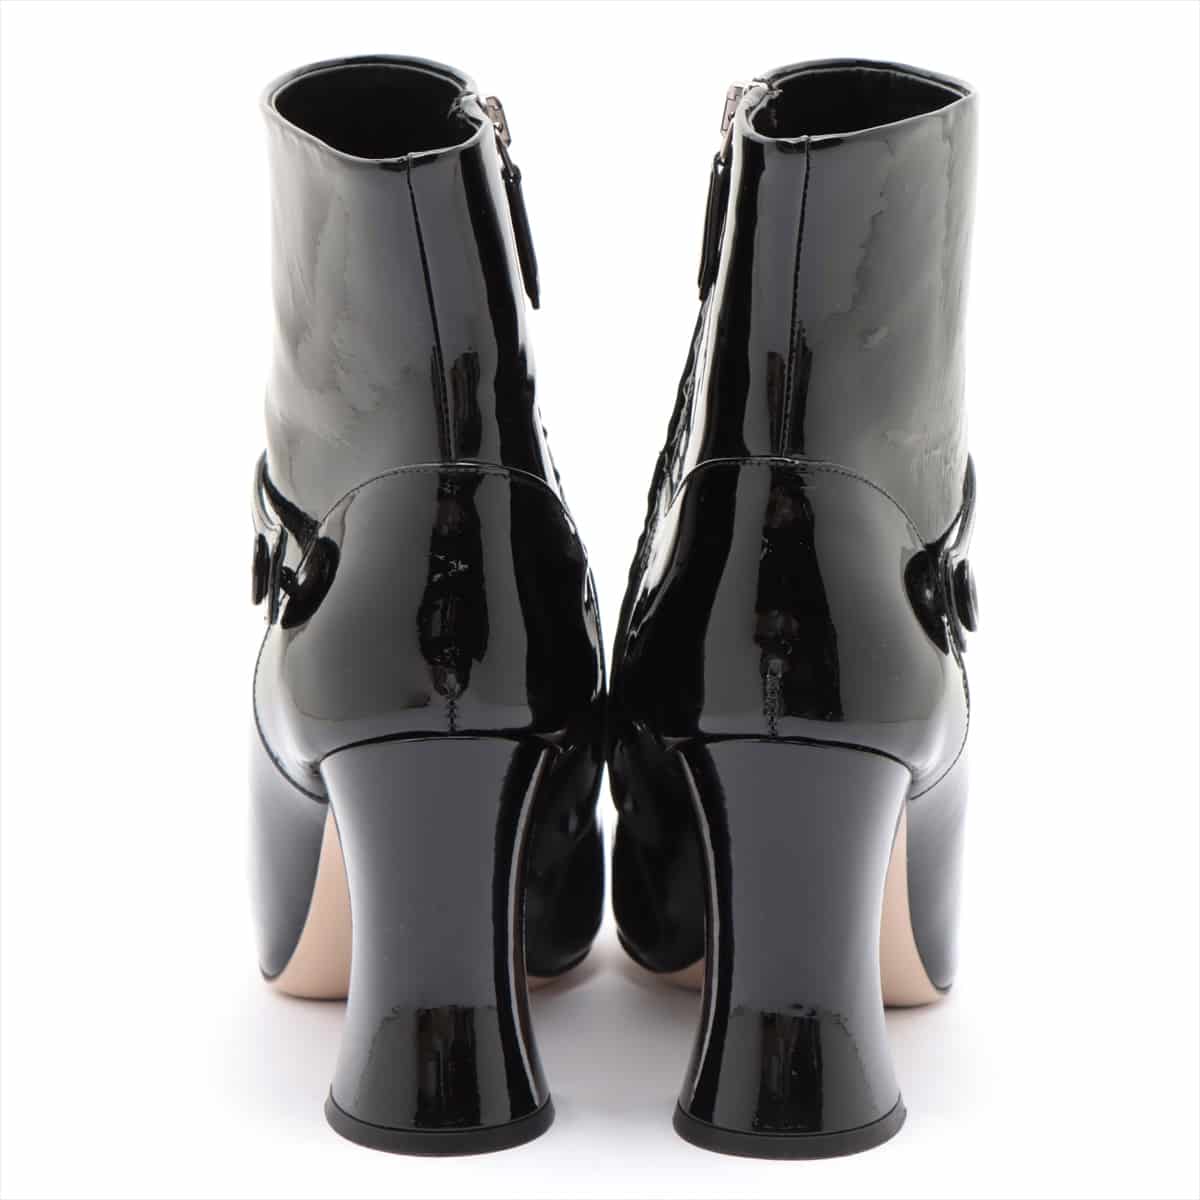 Miu Miu Patent leather Short Boots 38 Ladies' Black